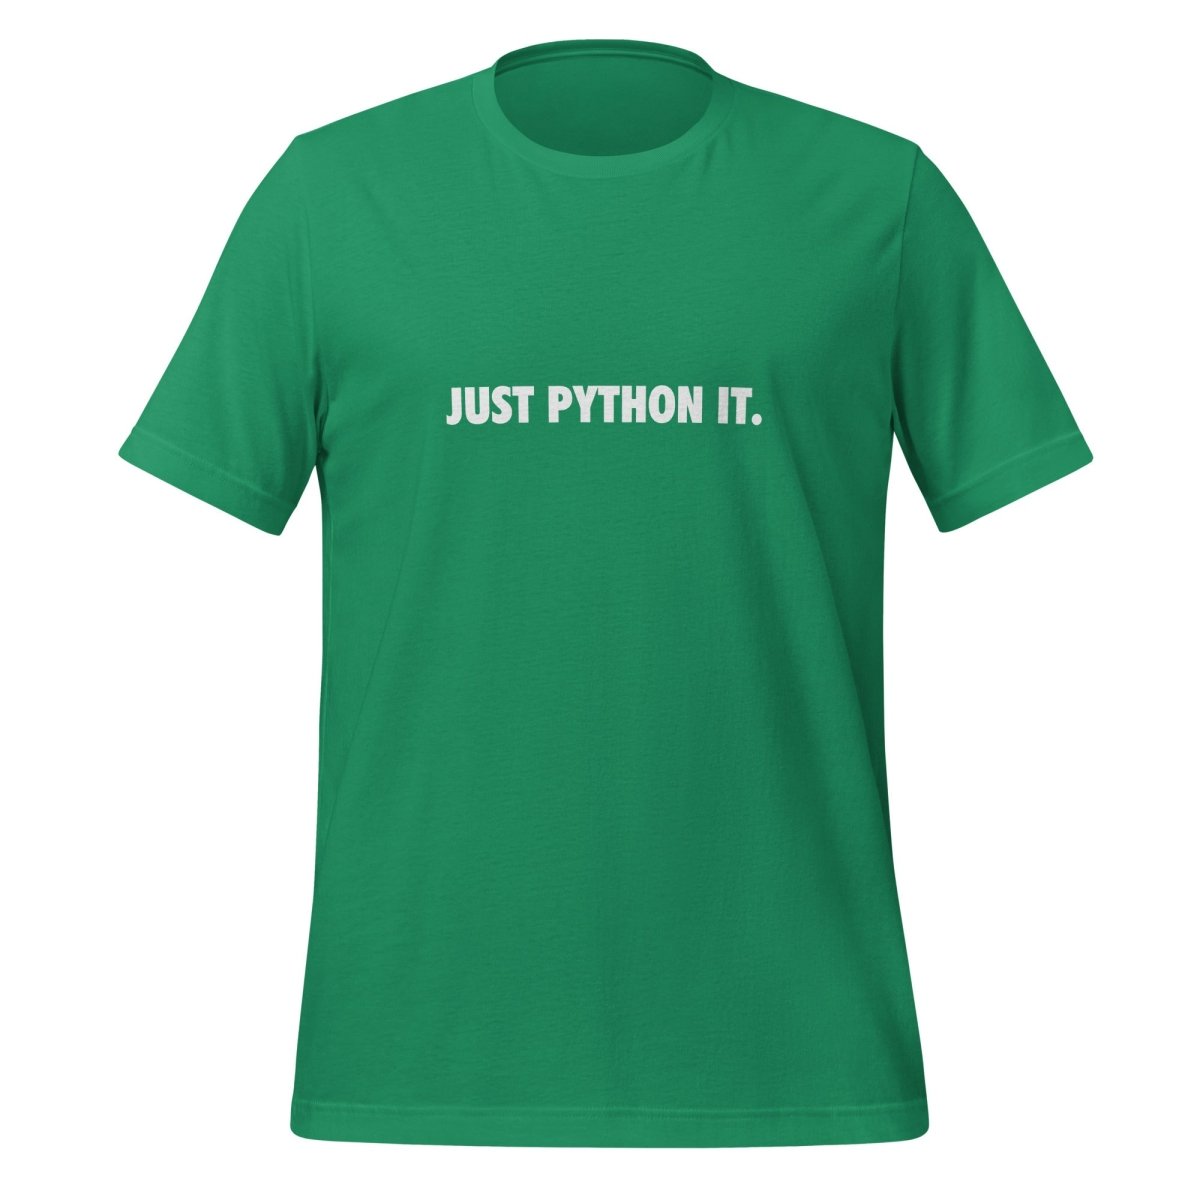 JUST PYTHON IT. T - Shirt (unisex) - Kelly - AI Store